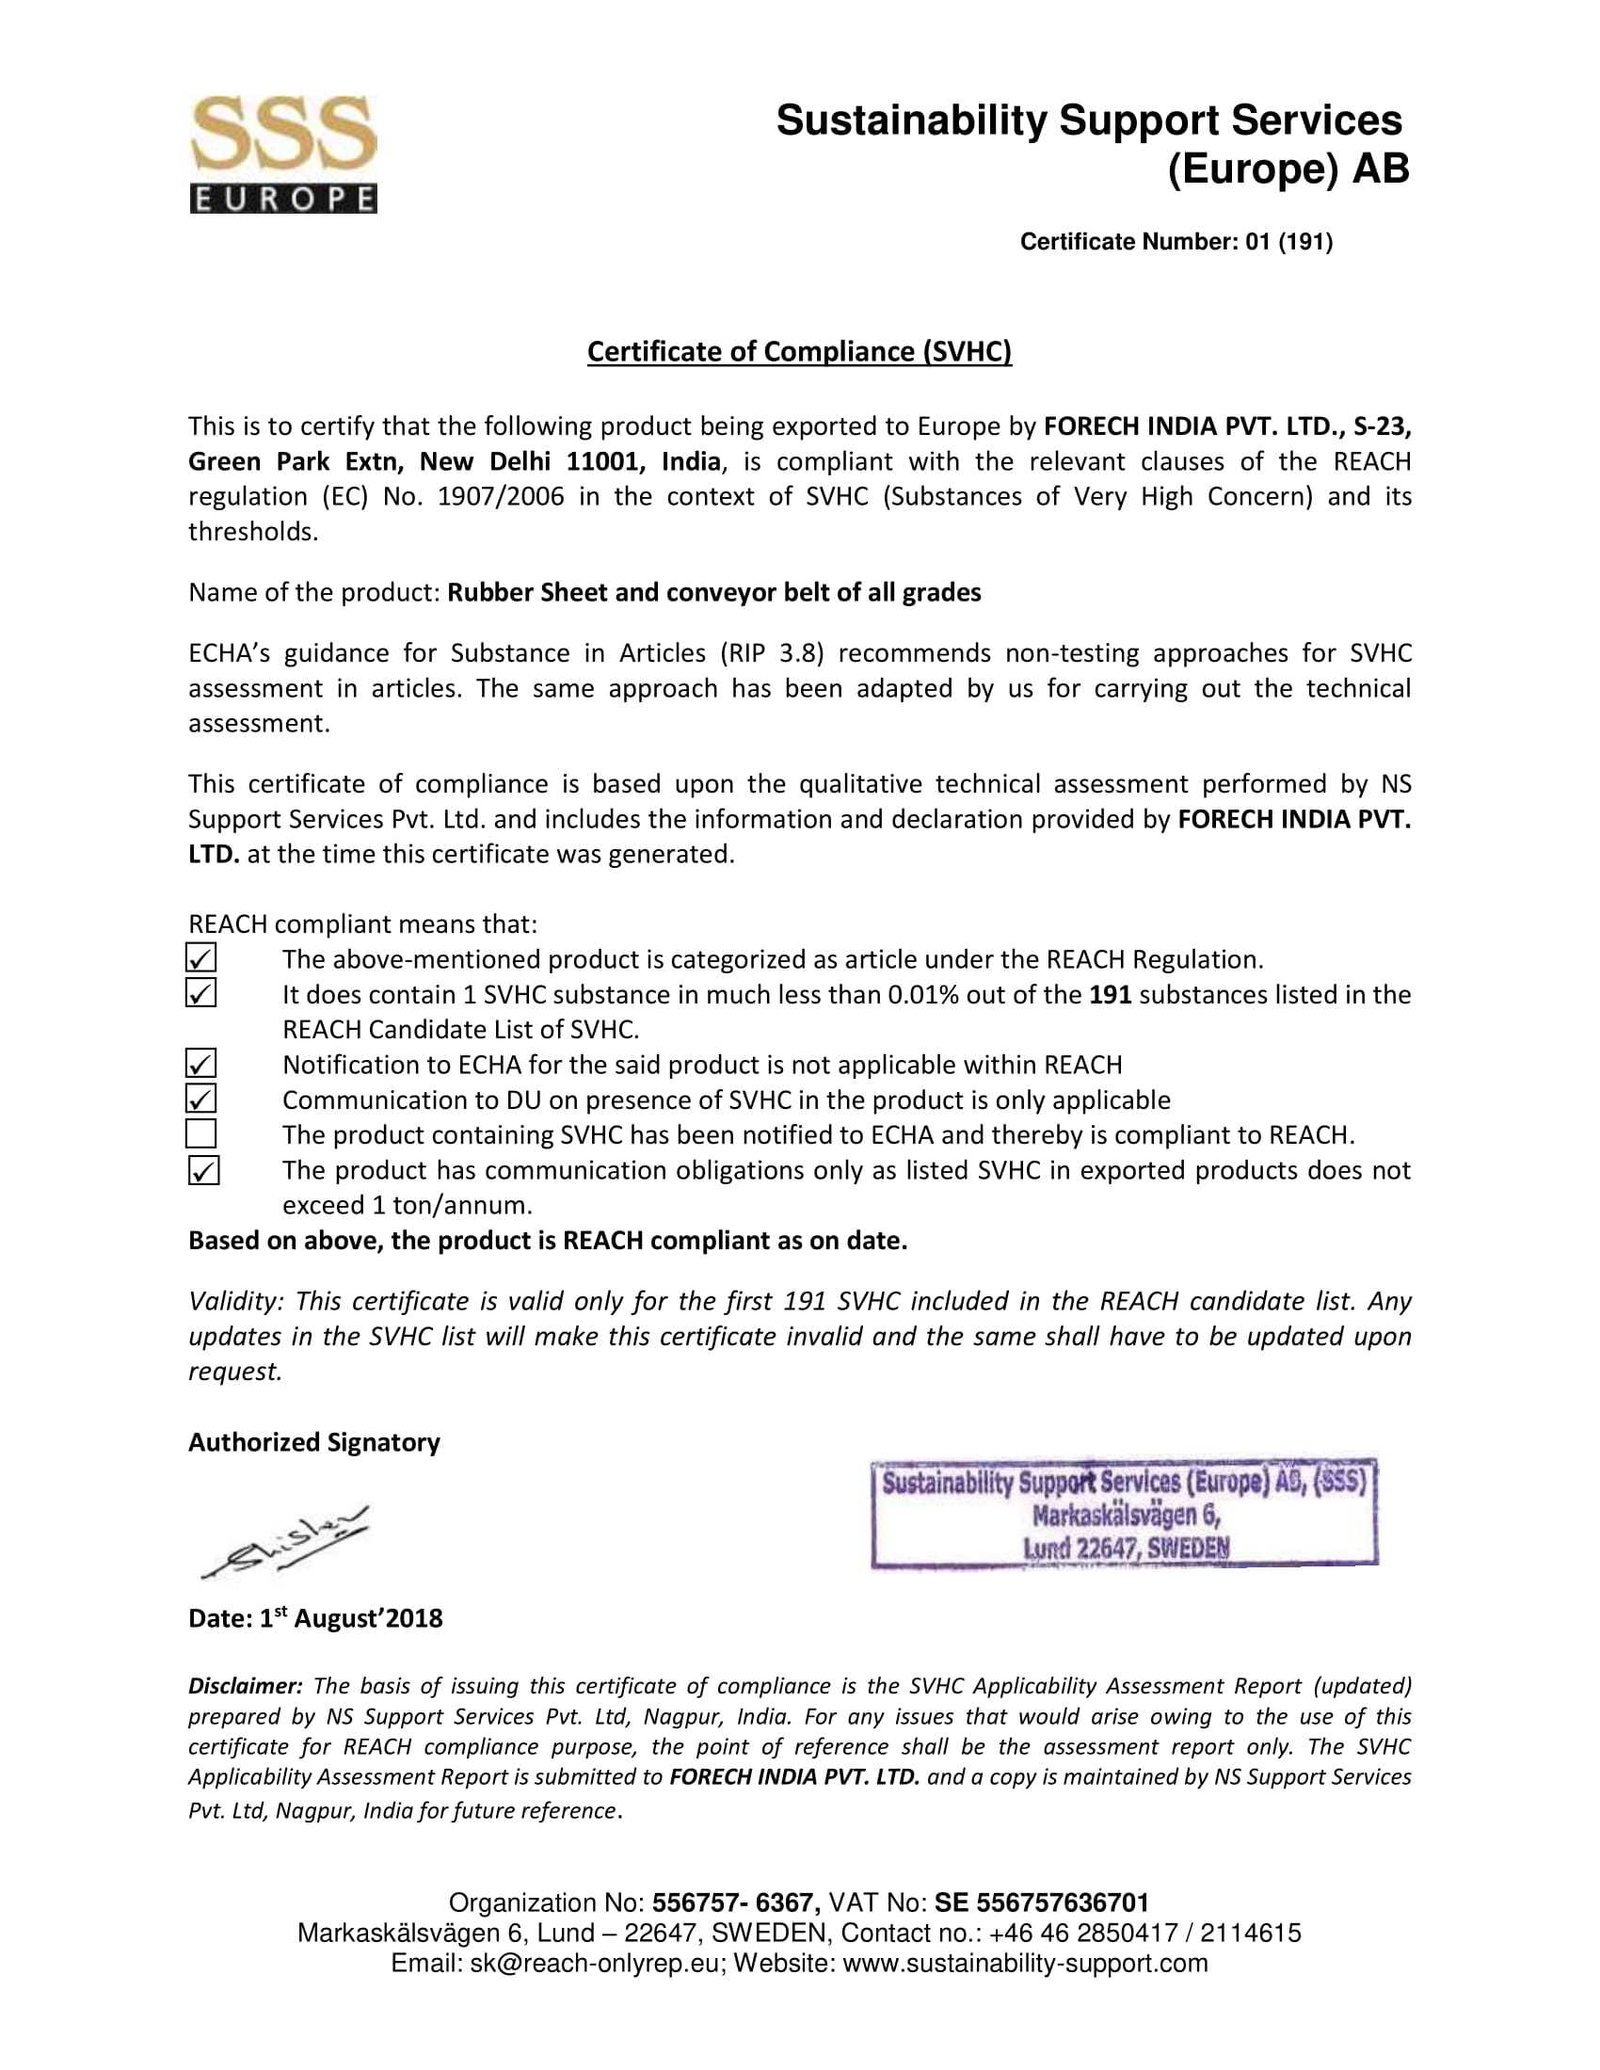 Escaneo del certificado ALCANCE para Forech India Private Limited